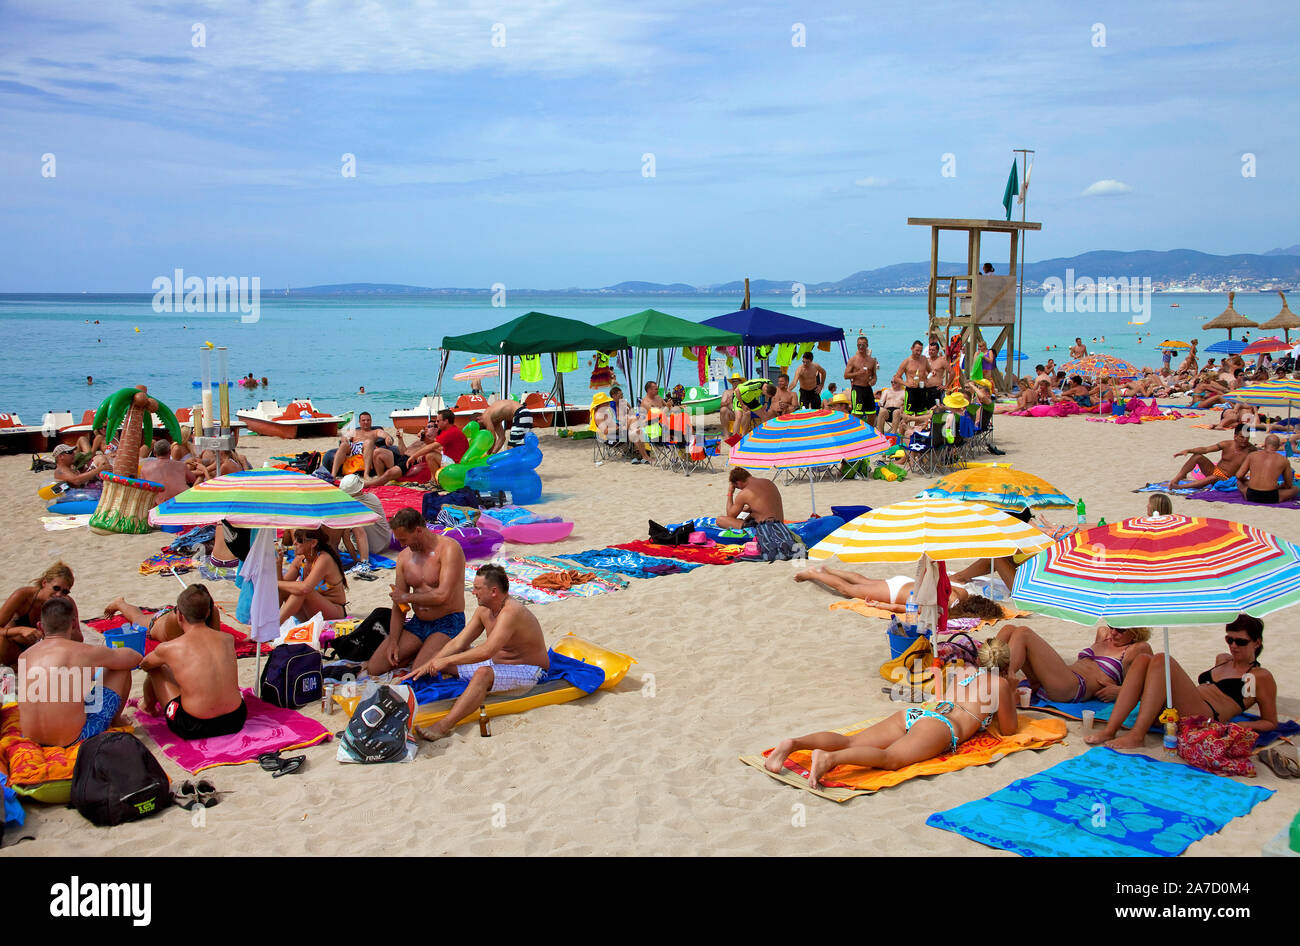 People at the beach Ballermann, Playa de Palma, El Arenal, Mallorca, Balearic islands, Spain Stock Photo